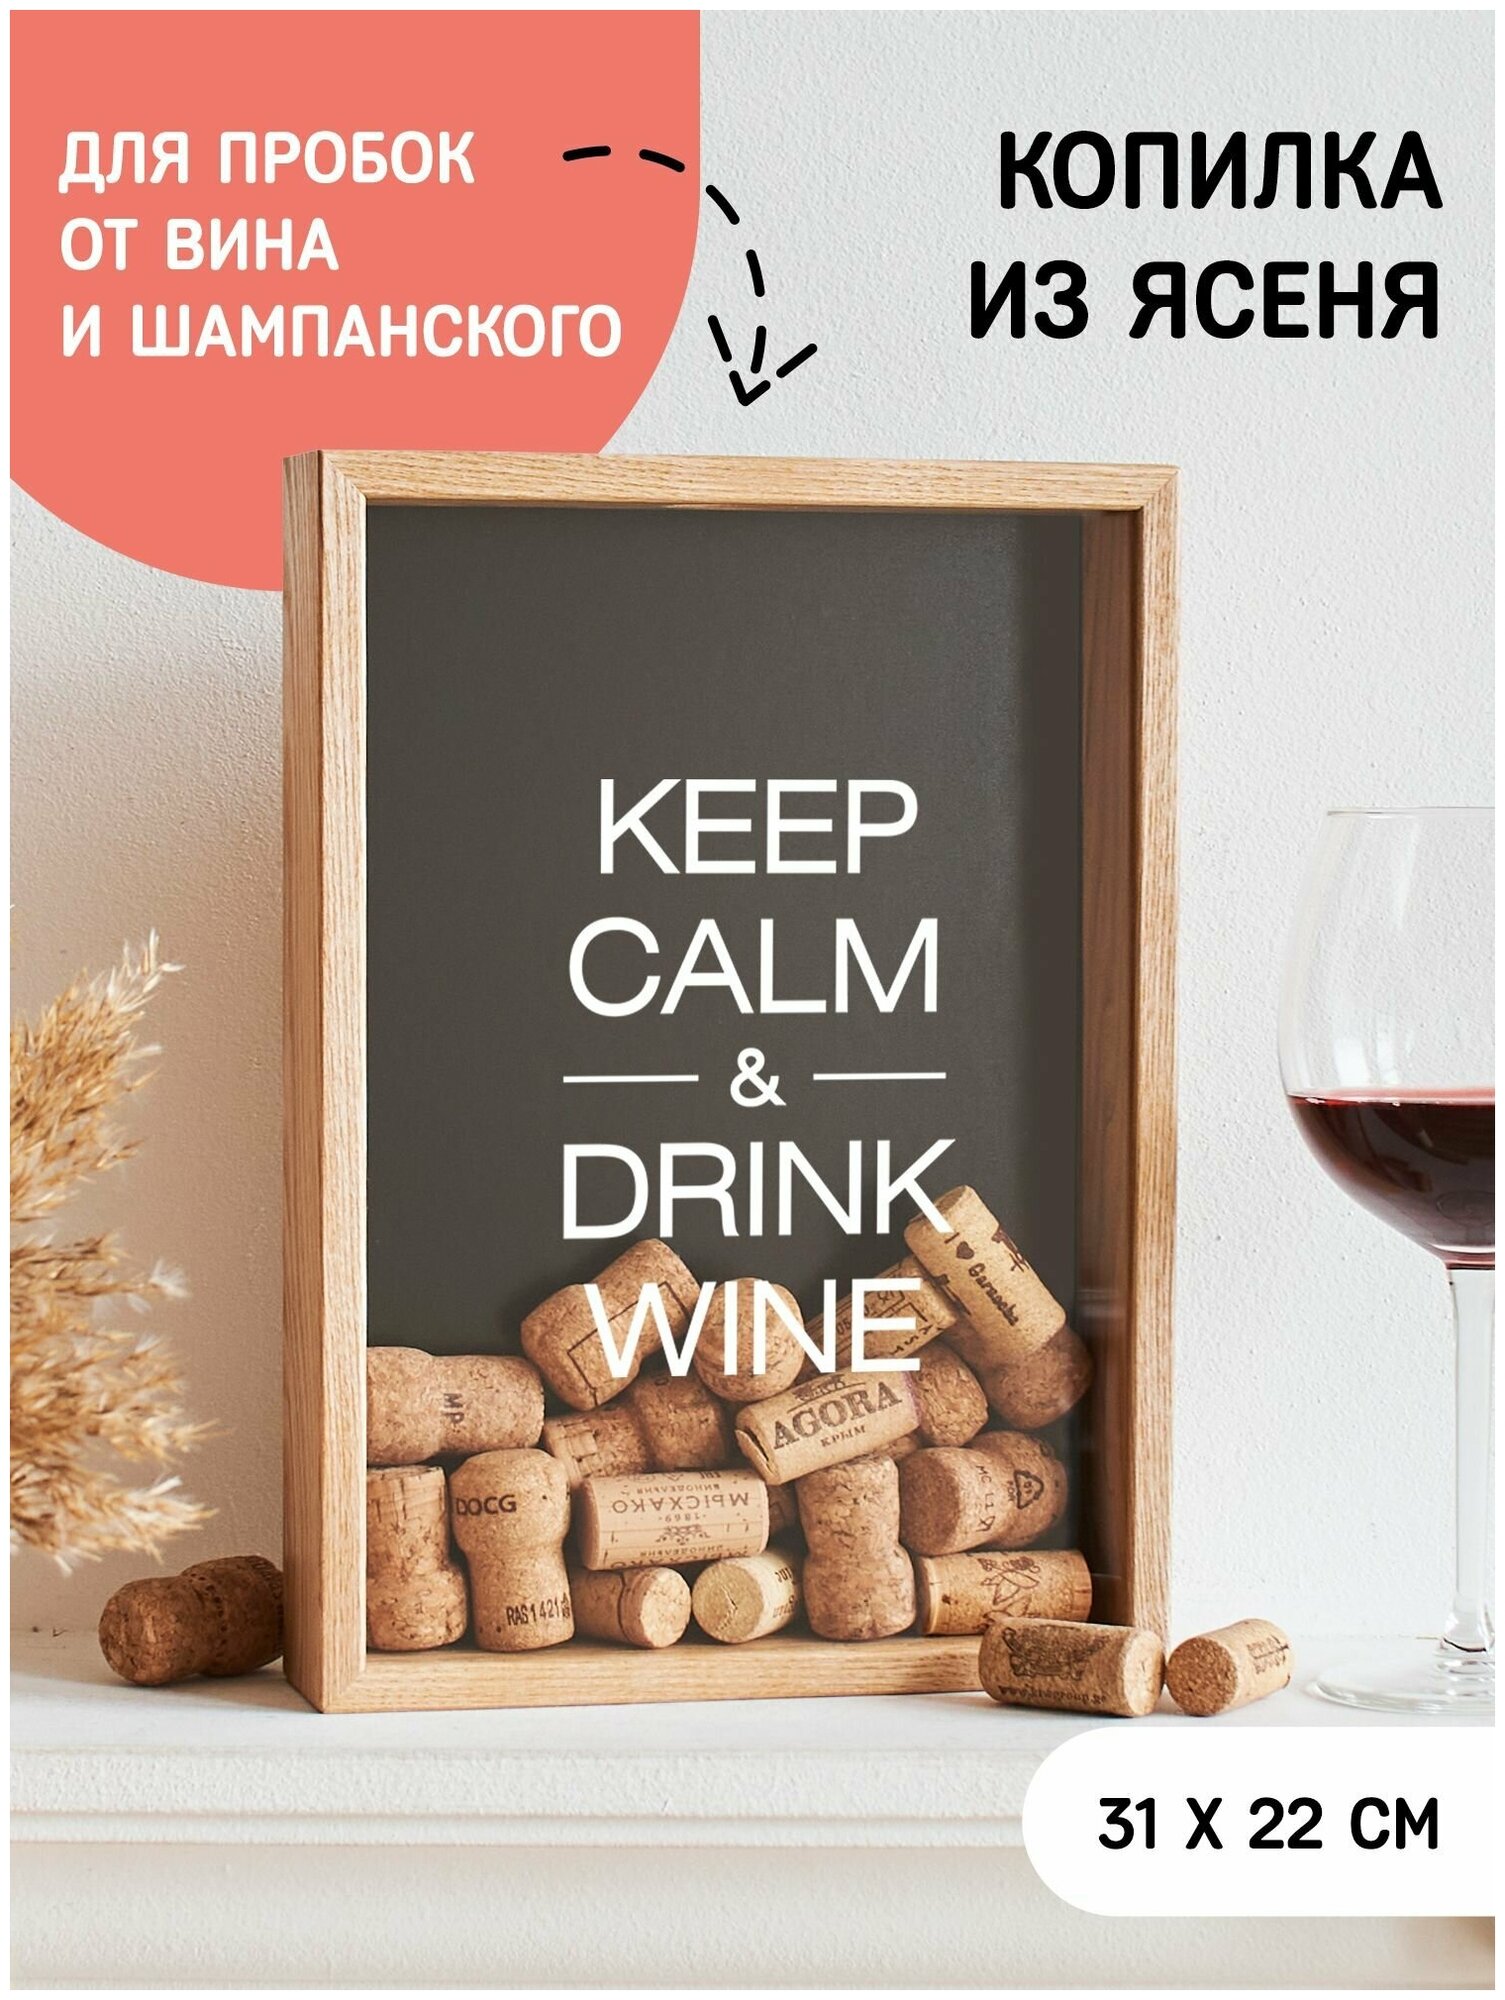 Копилка для винных пробок Keep calm & drink wine